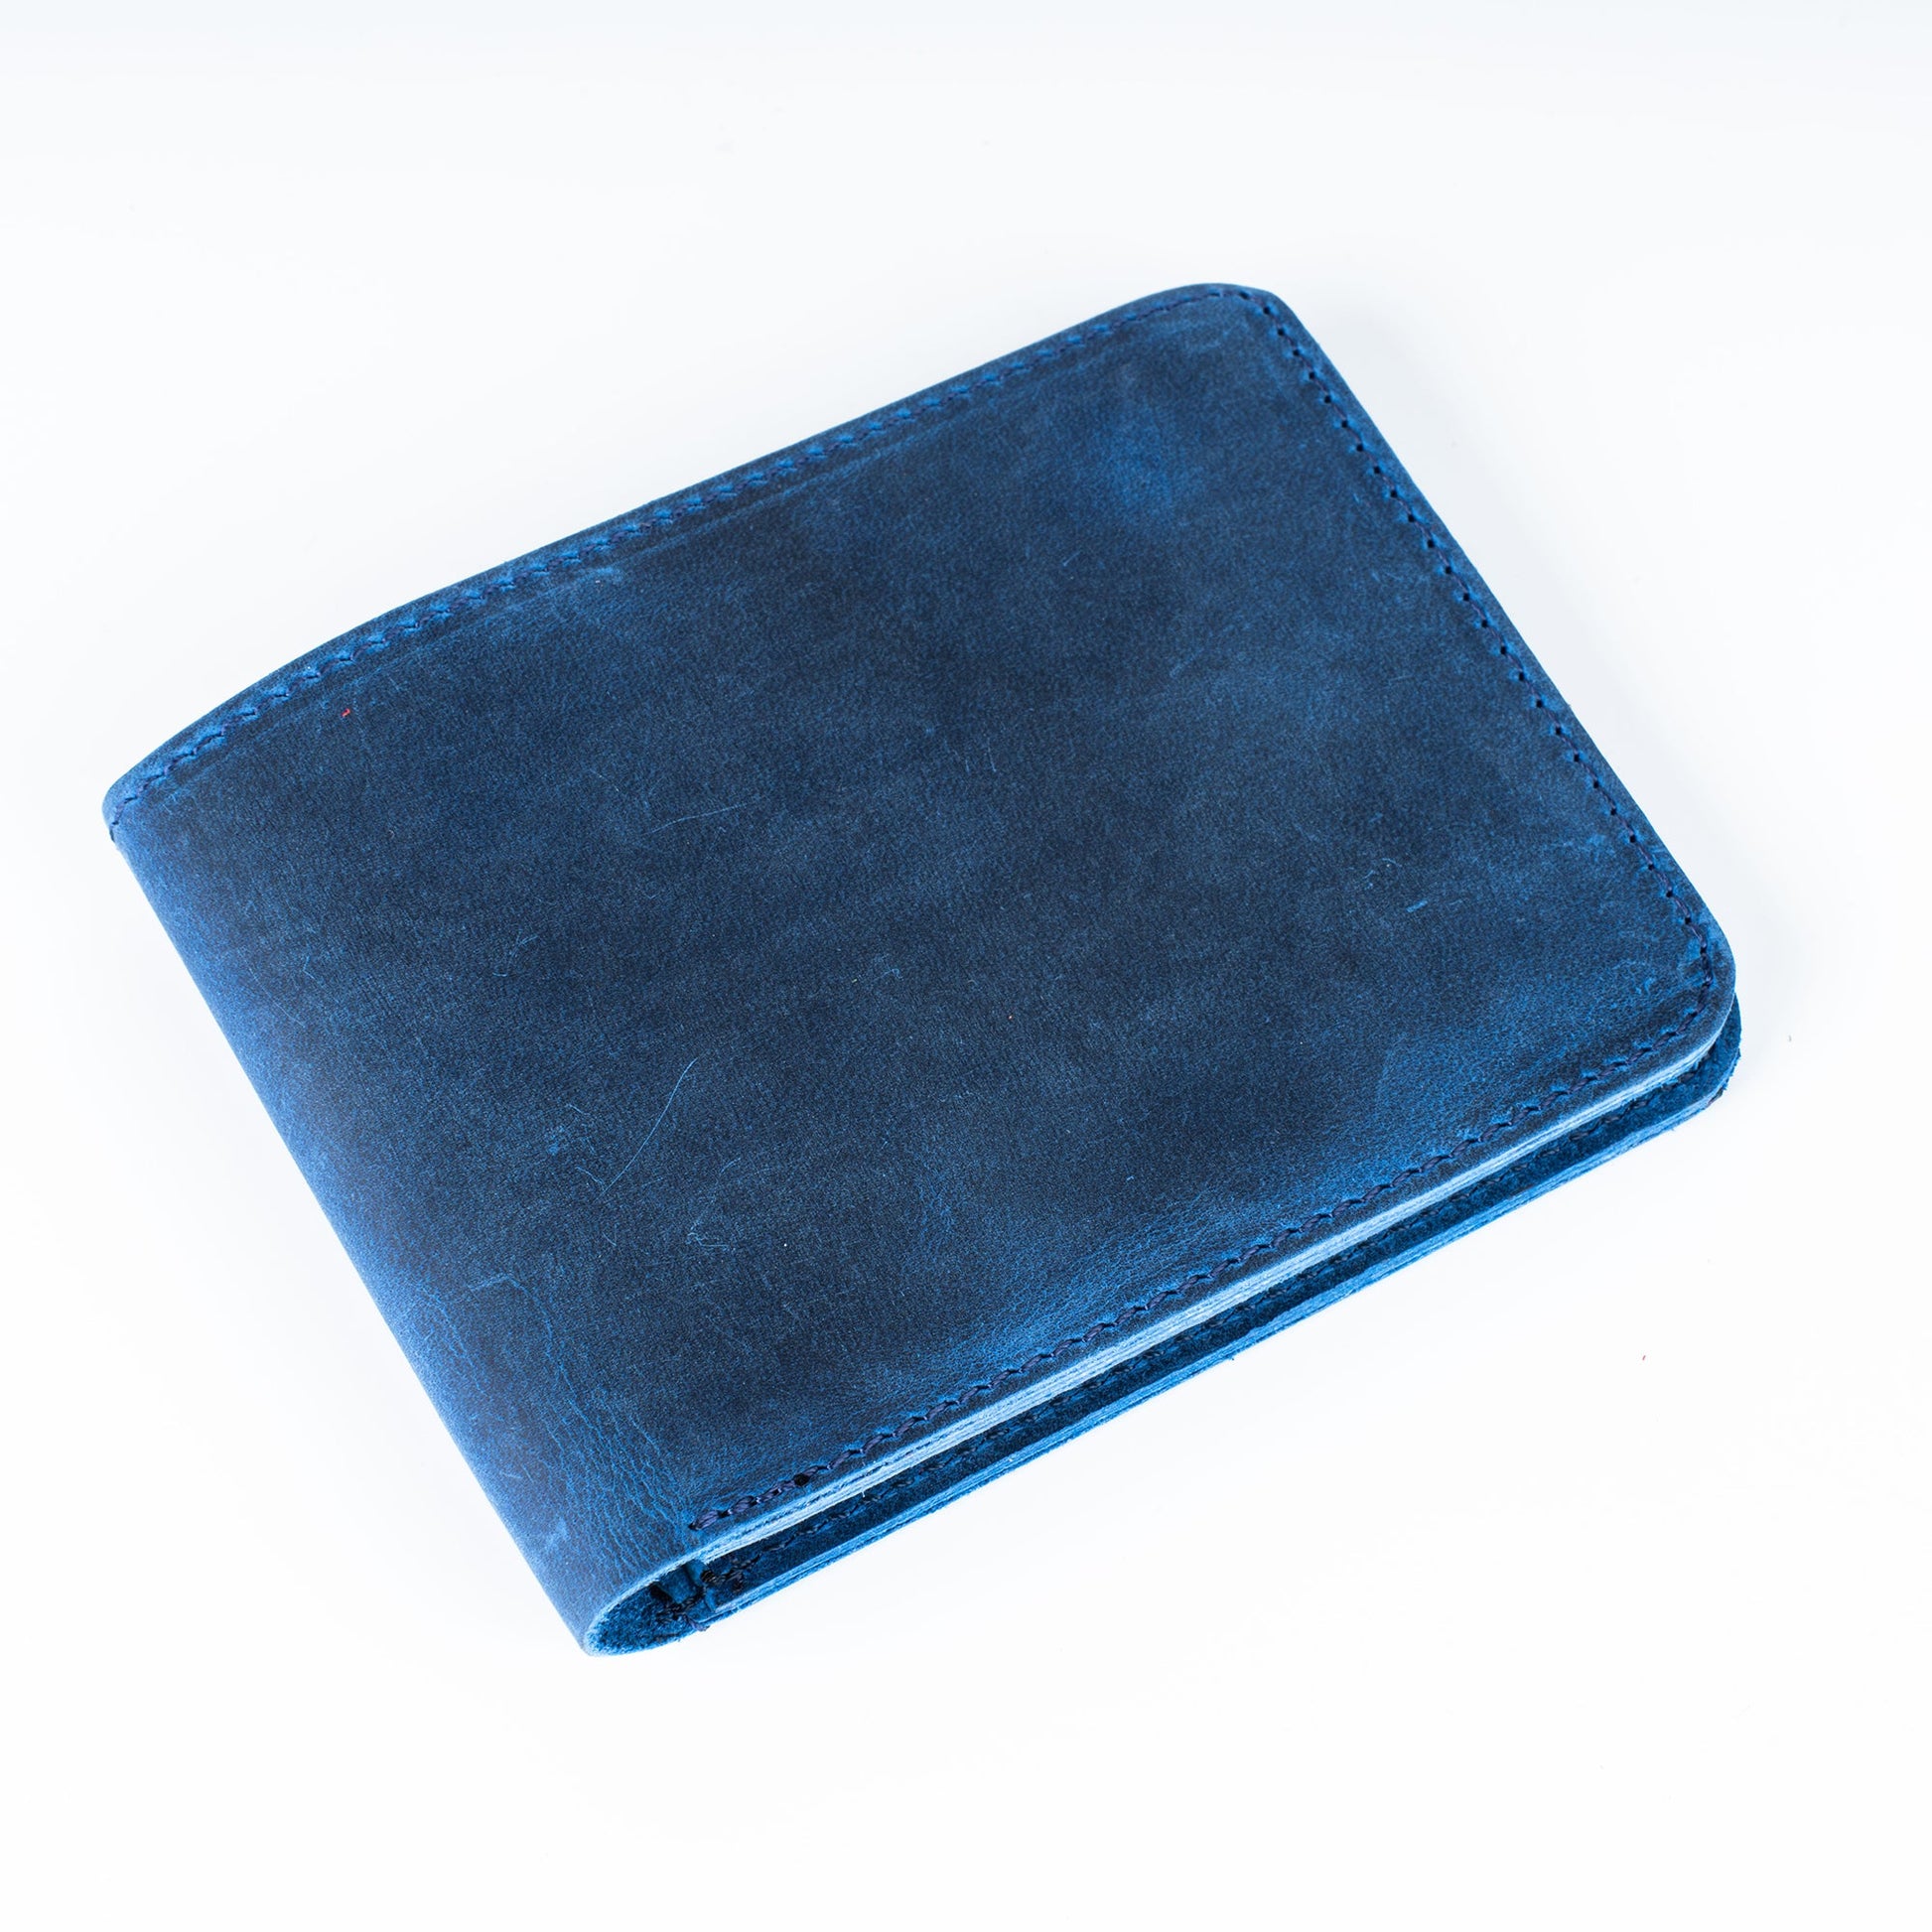 Tampa Men’s Leather Bifold Wallet - Blue - Wallets Zengoda Shop online from Artisan Brands